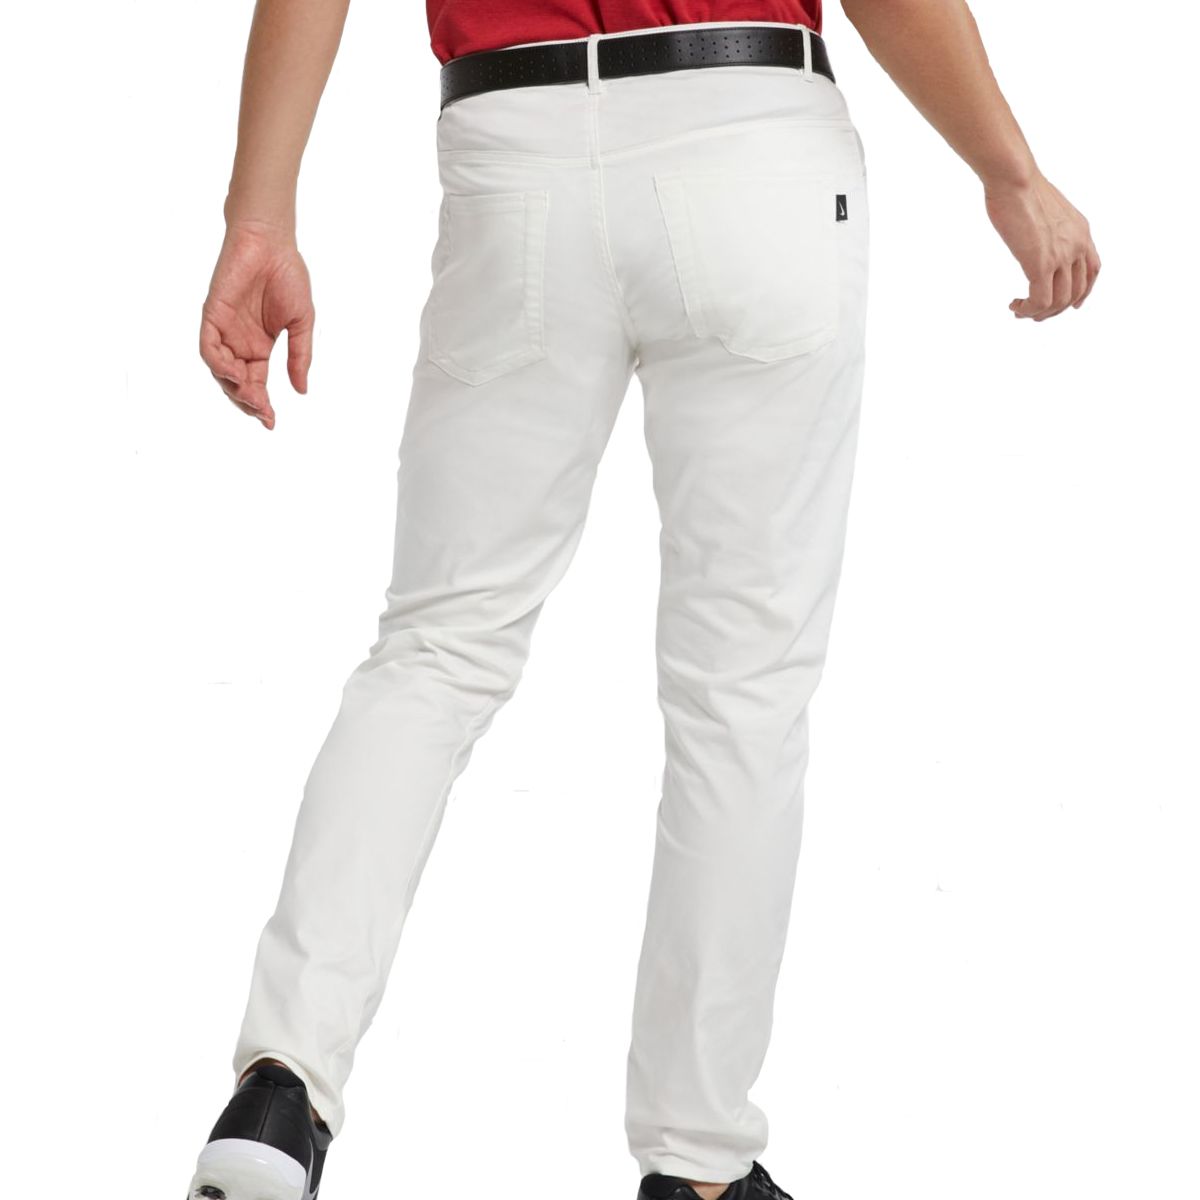 Nike 5 Pocket Slim Flex Pant 891924 